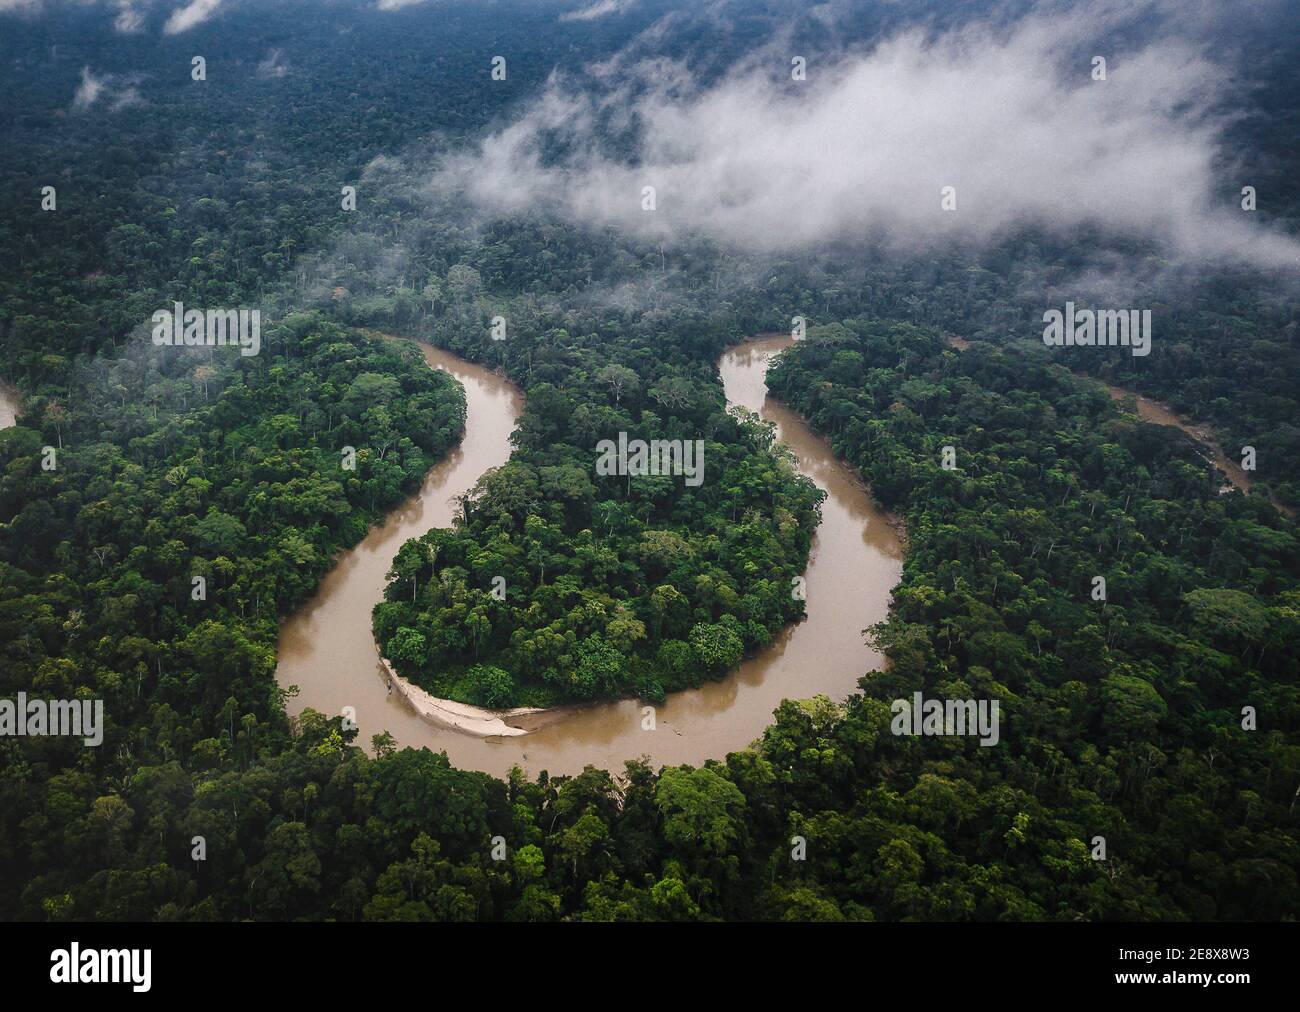 Amazon Rainforest, Pastaza, Ecuador Stock Photo